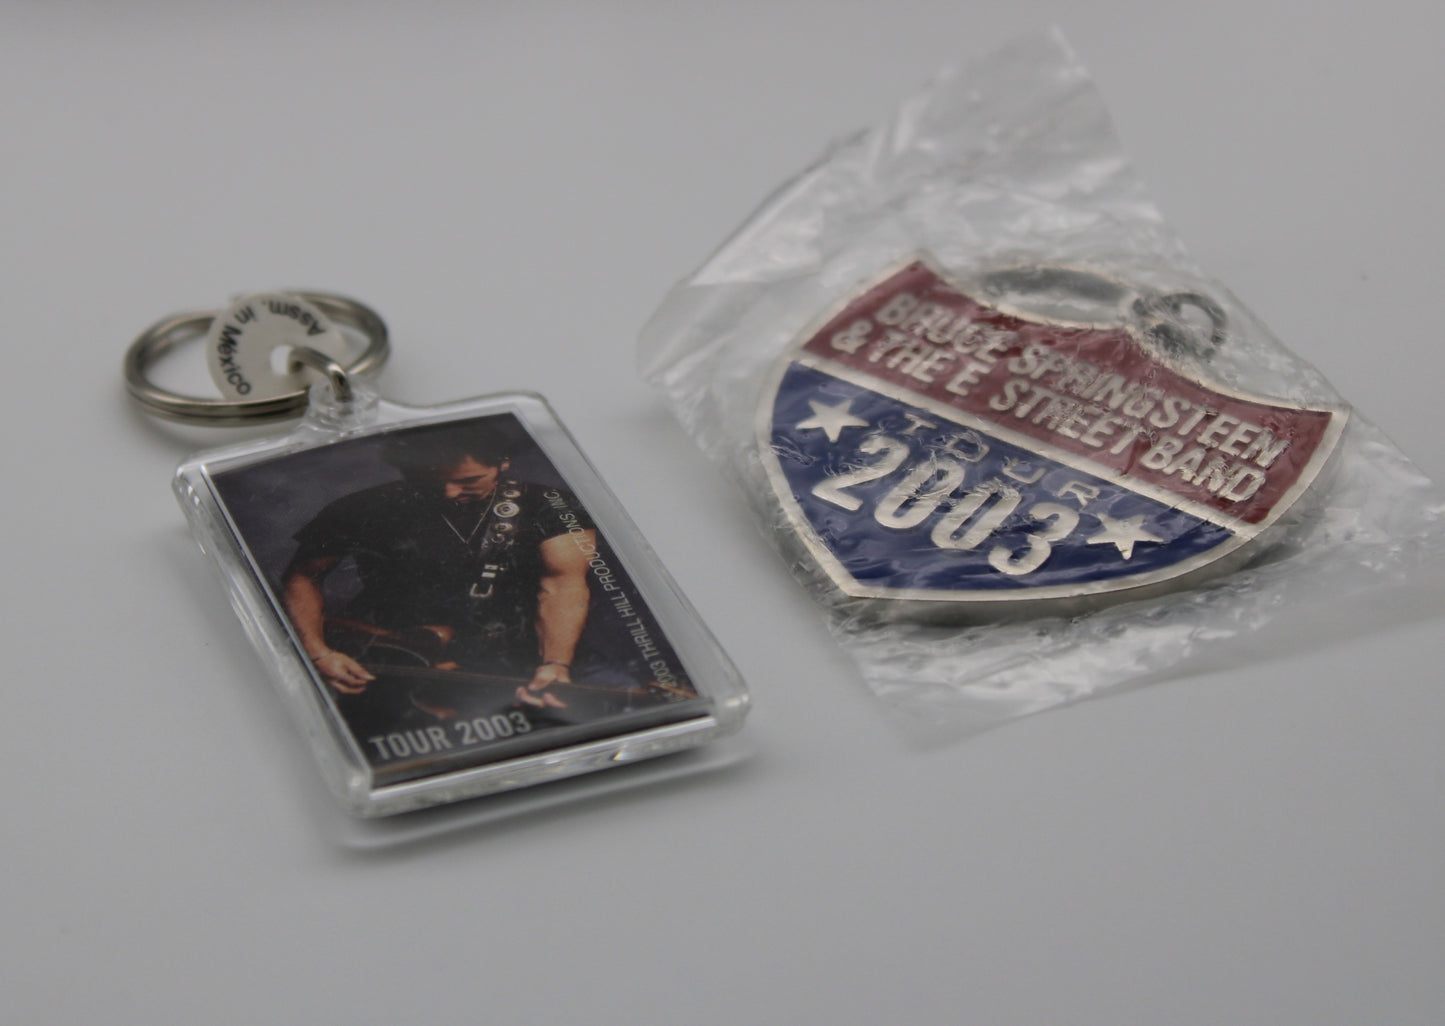 Bruce Springsteen - 2003 Concert Tour Memorabilia - Keychain 2 Pack!